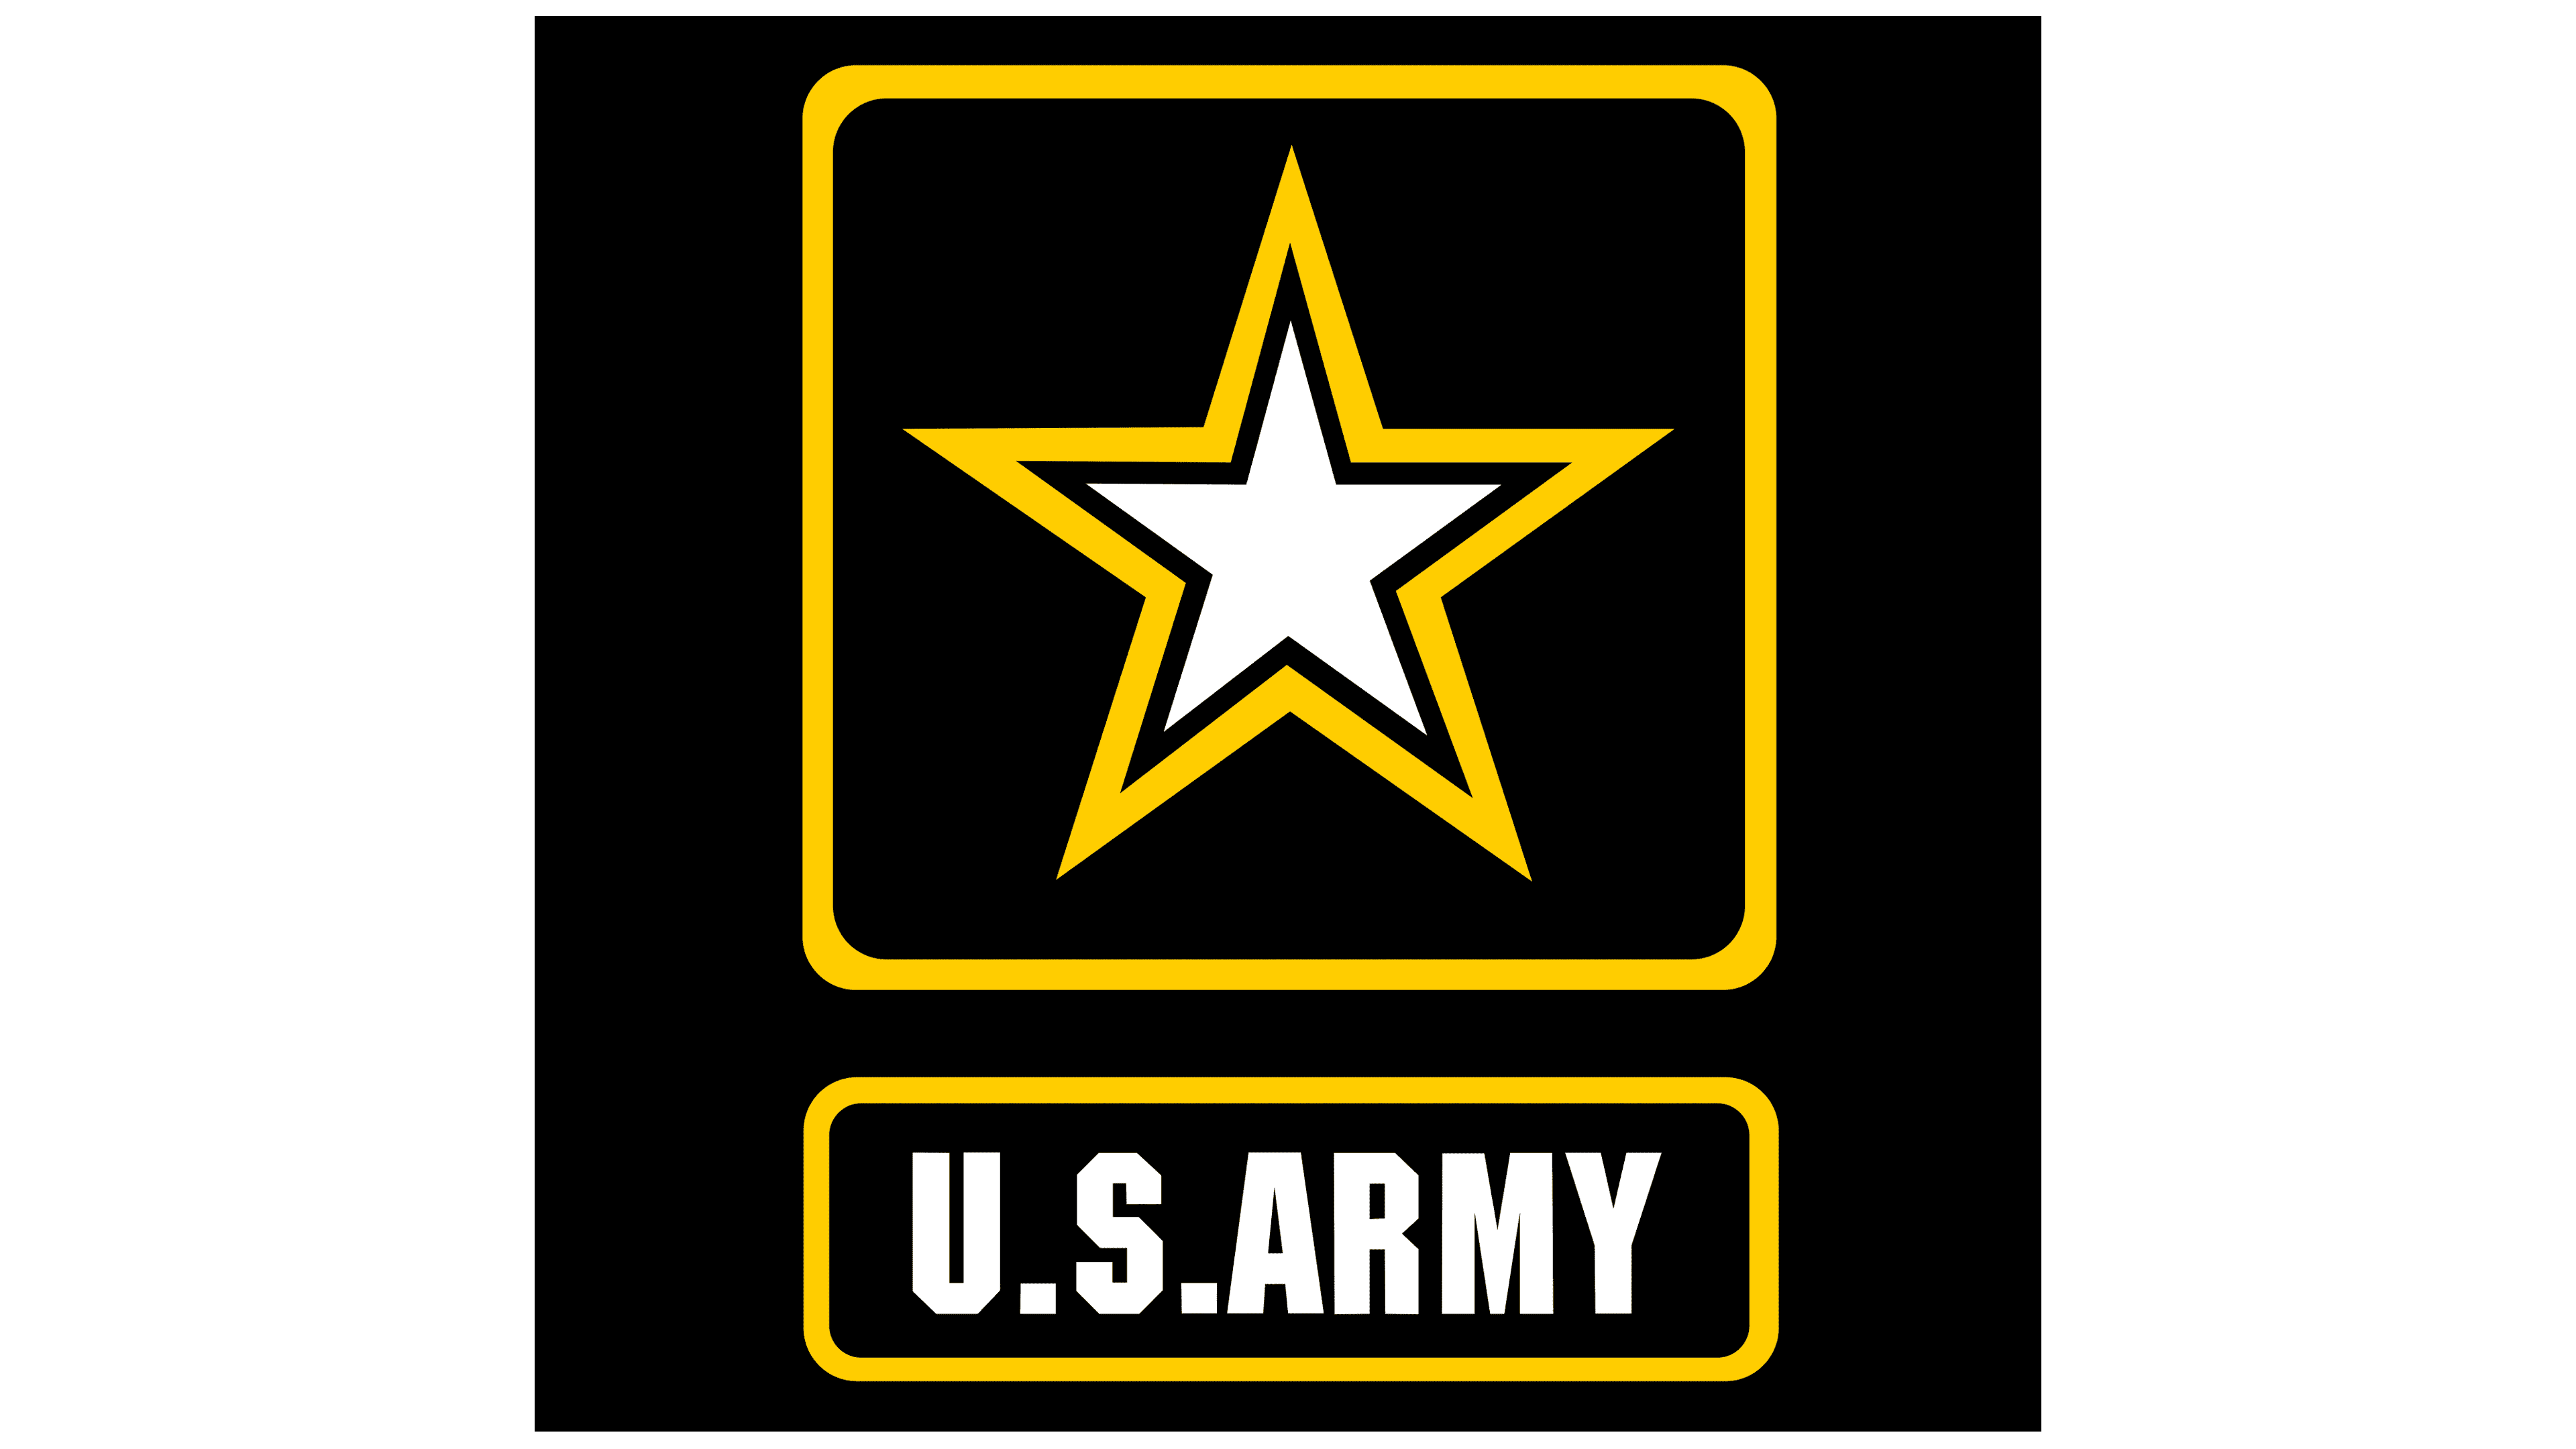 army logos and symbols